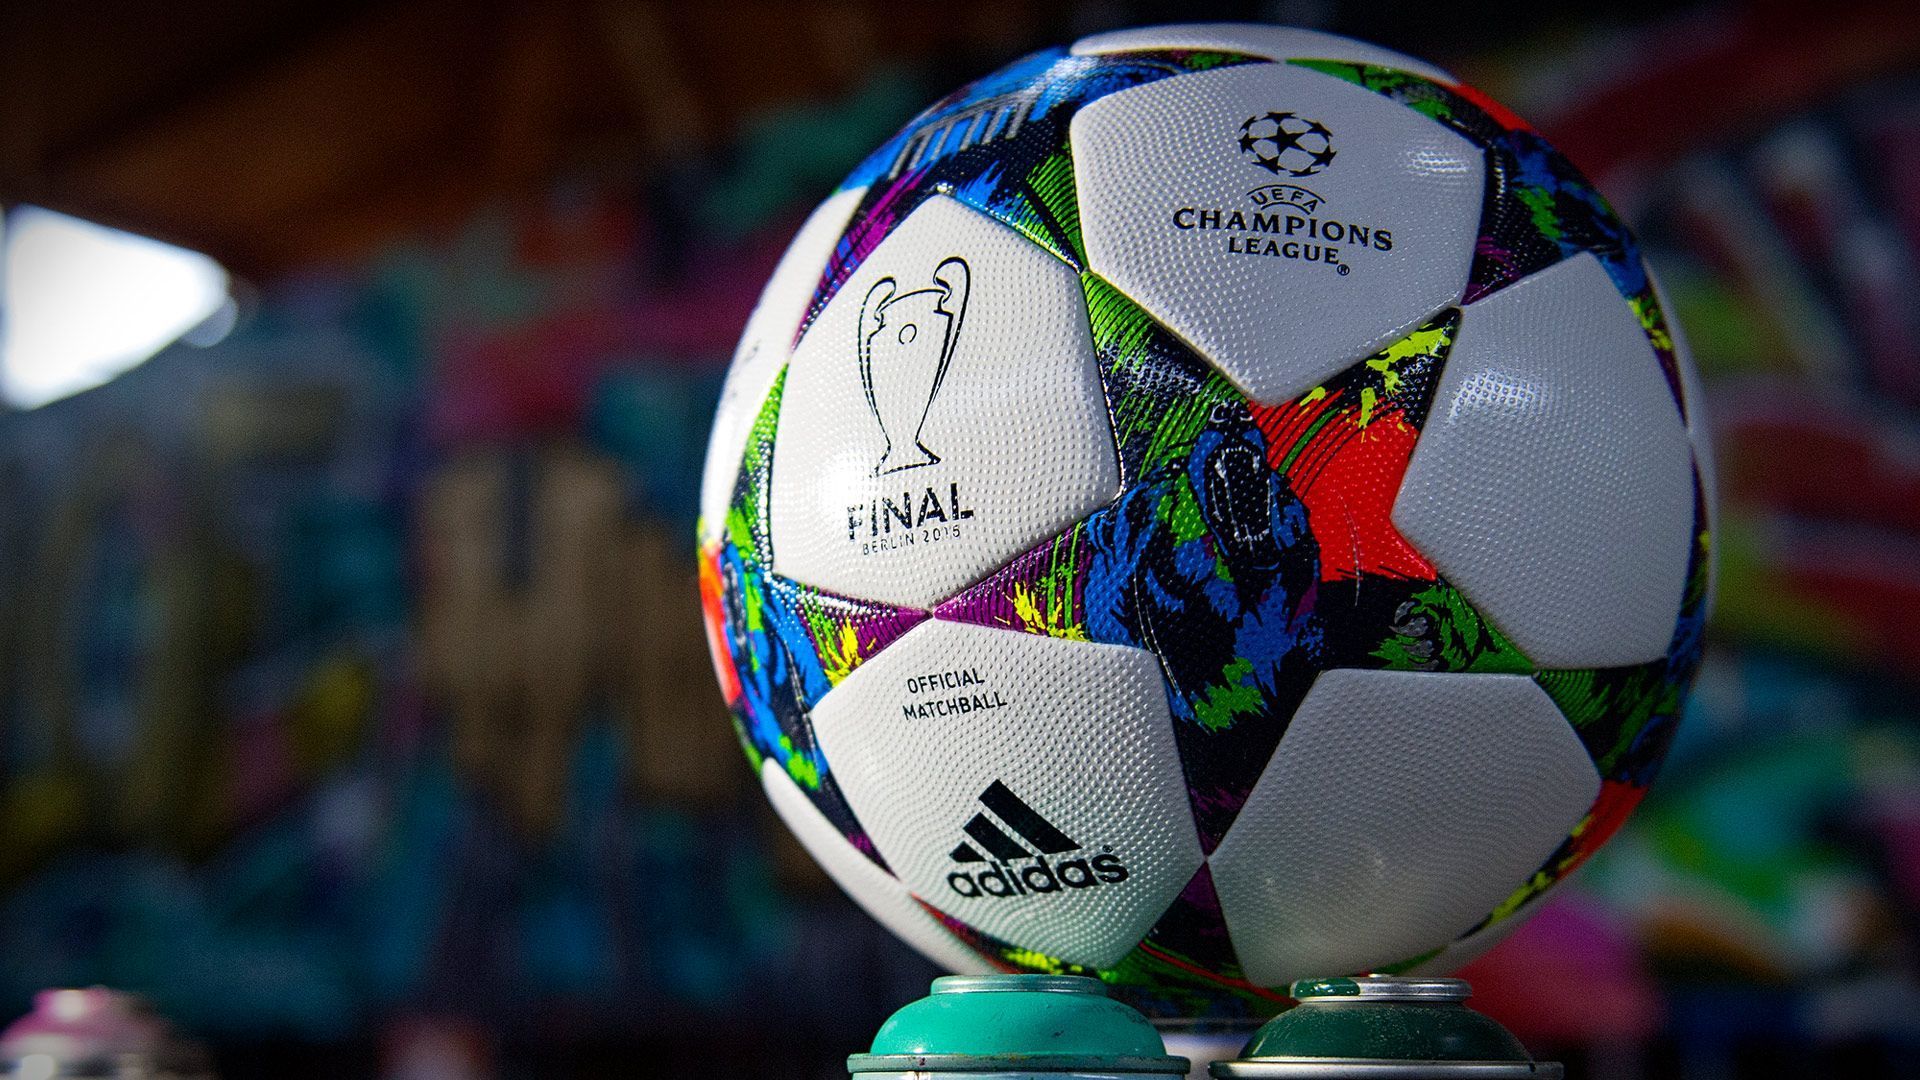 UEFA champions league 2015 ball wallpapers Free full hd